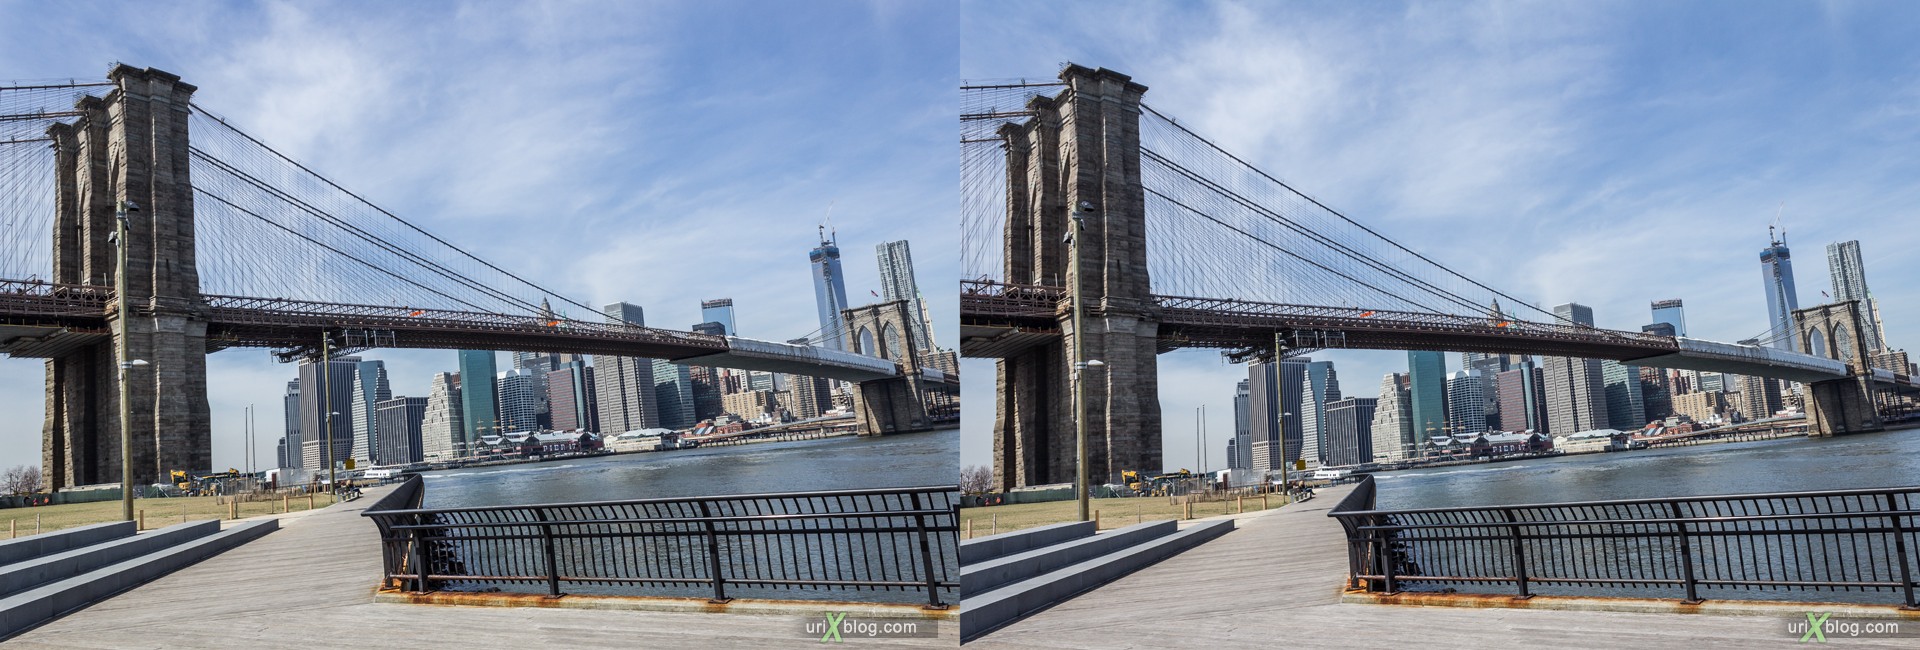 2013, Brooklyn Bridge парк, Нью-Йорк, США, 3D, перекрёстные стереопары, стерео, стереопара, стереопары